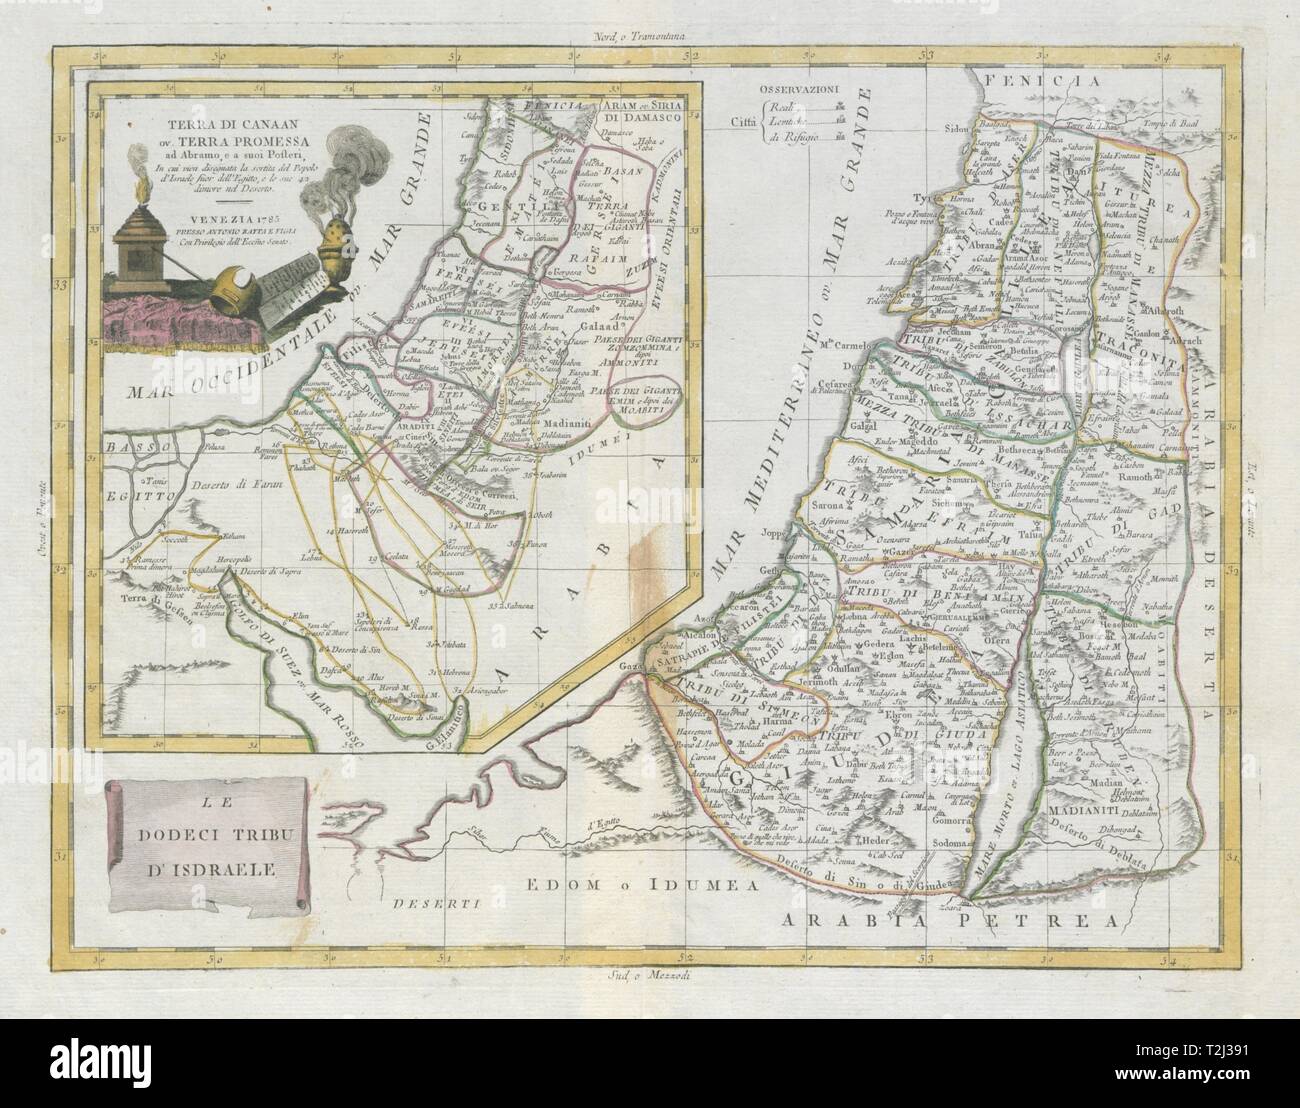 'Le Dodeci Tribu d'Isdraele'. Promised Land. 12 Tribes of Israel. ZATTA 1785 map Stock Photo